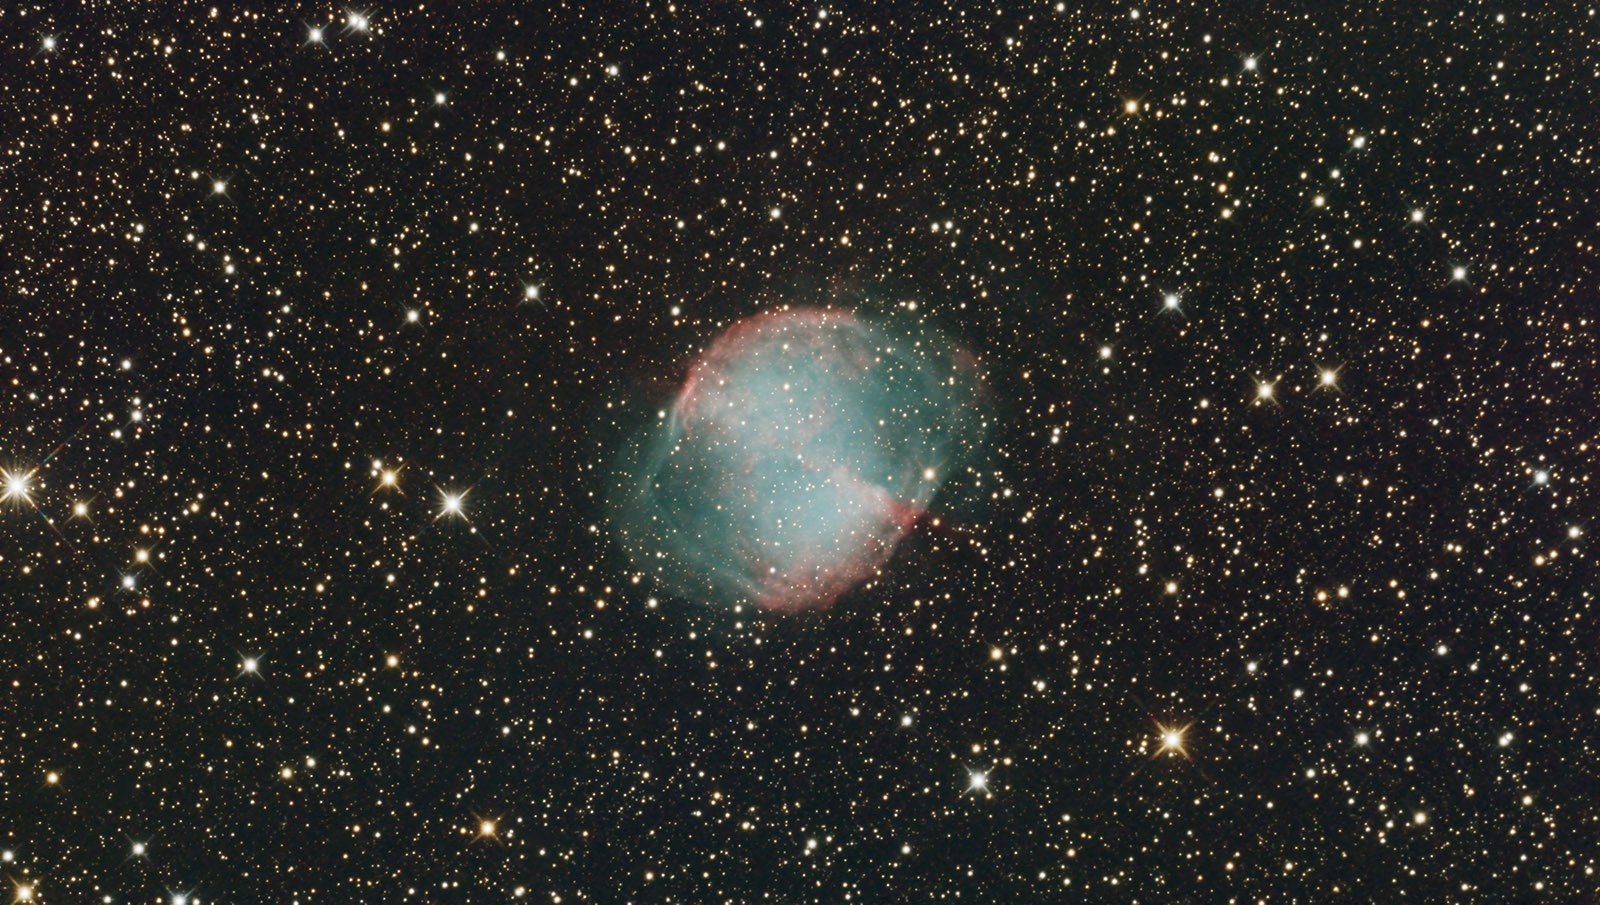 Player One Uranus-C ( IMX585 ) First Light - Experienced Deep Sky